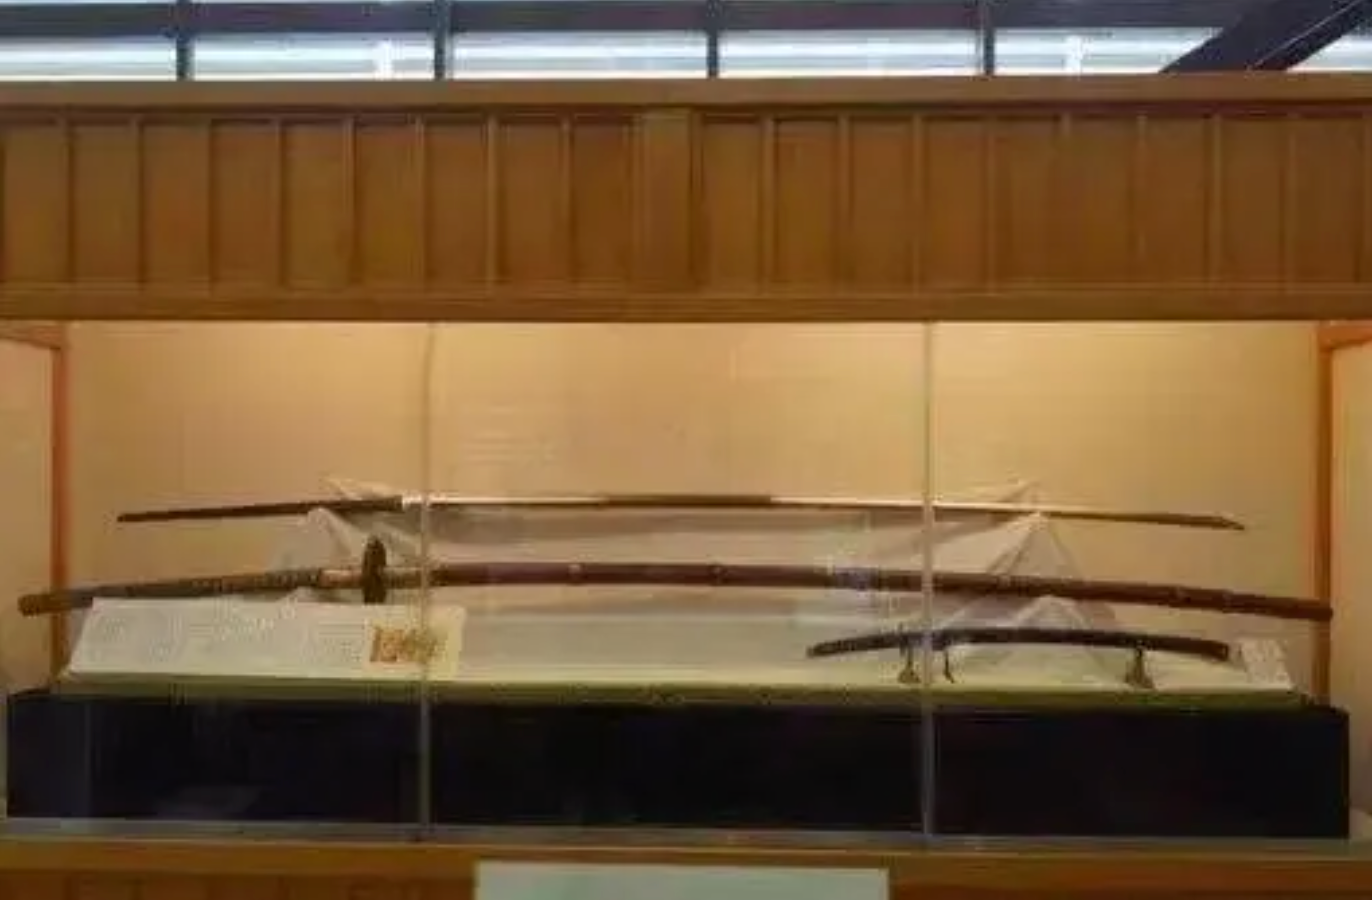 Odachi Sword: The Gigantic Weapon of Japanese Samurai